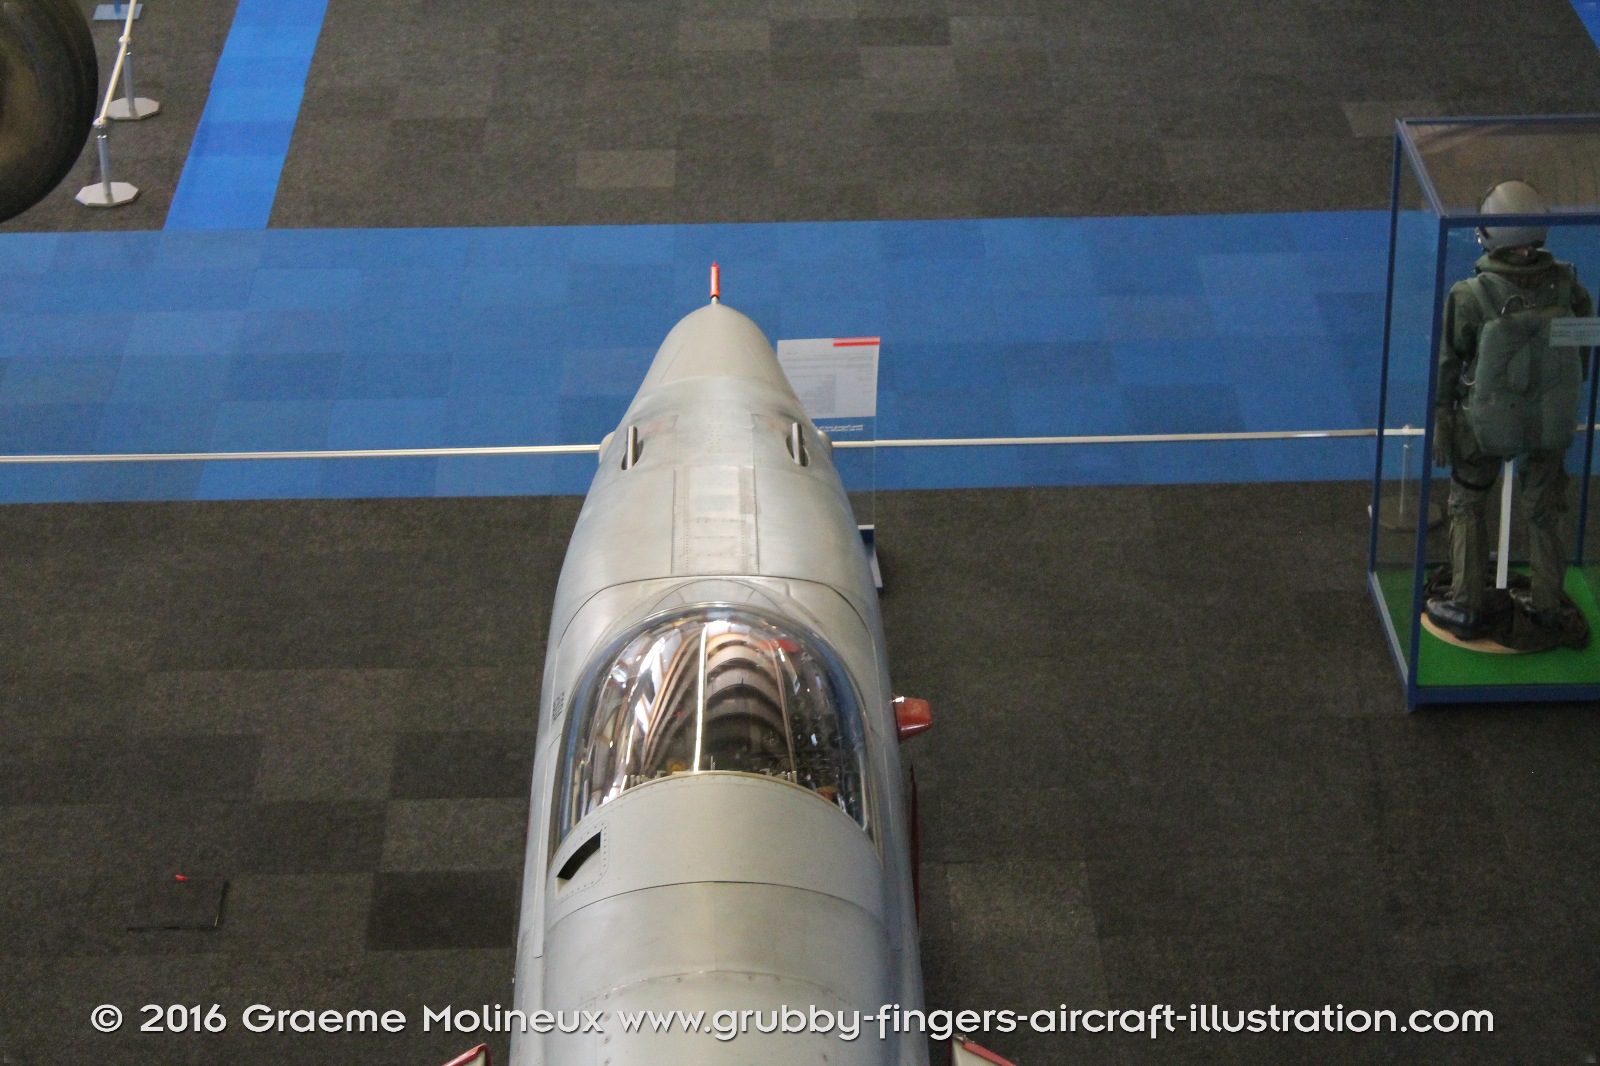 NORTHROP_F-5E_Freedom_Fighter_J-3098_Swiss_Air_Force_Museum_2015_16_GrubbyFingers